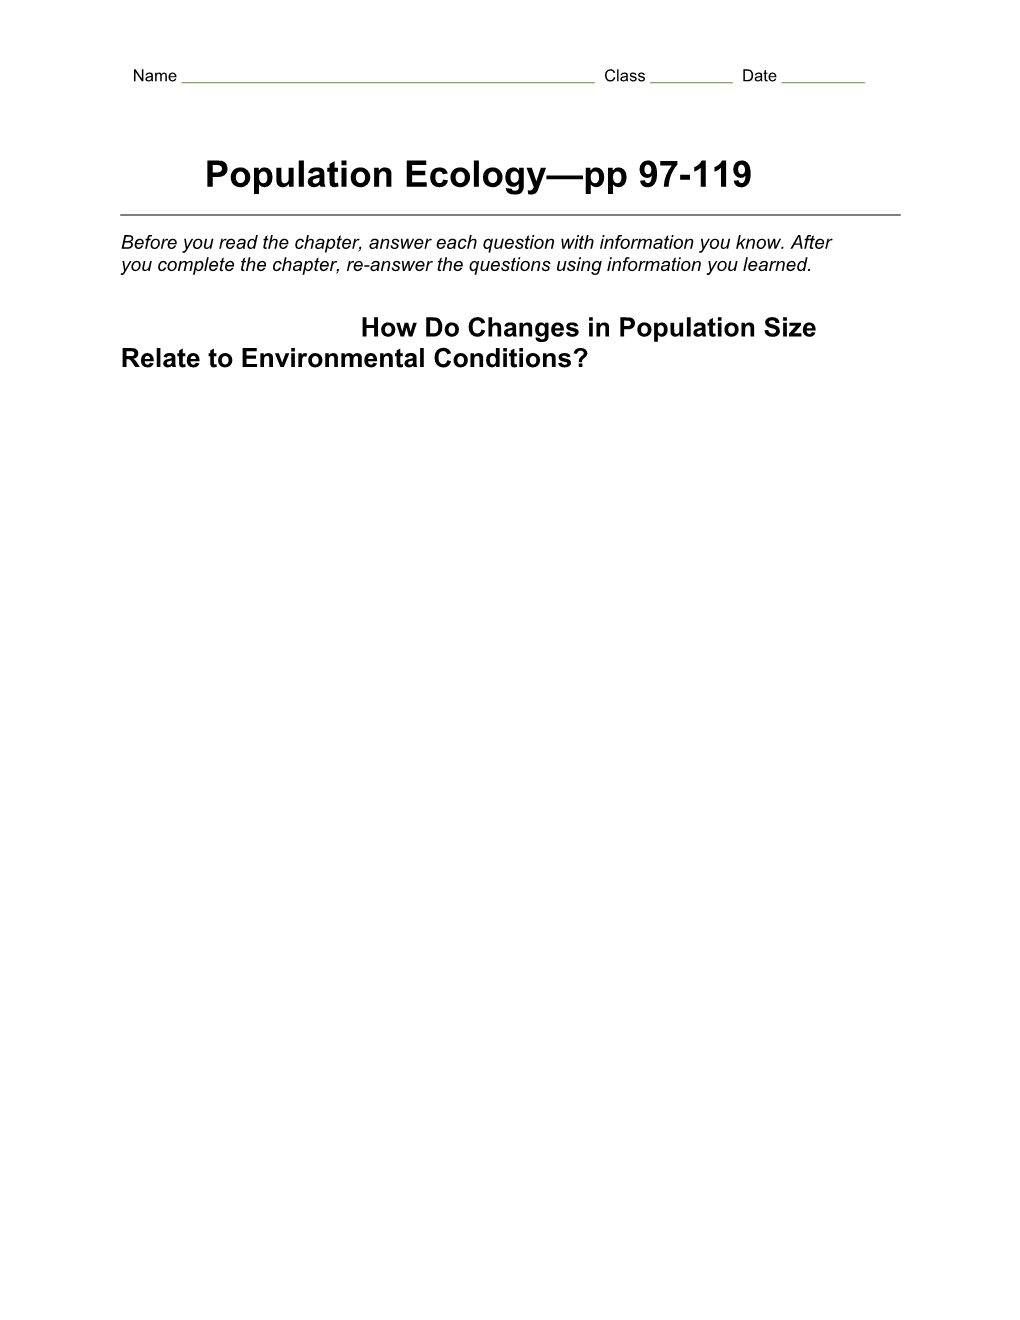 Chapter 4: Population Ecology Vocabulary